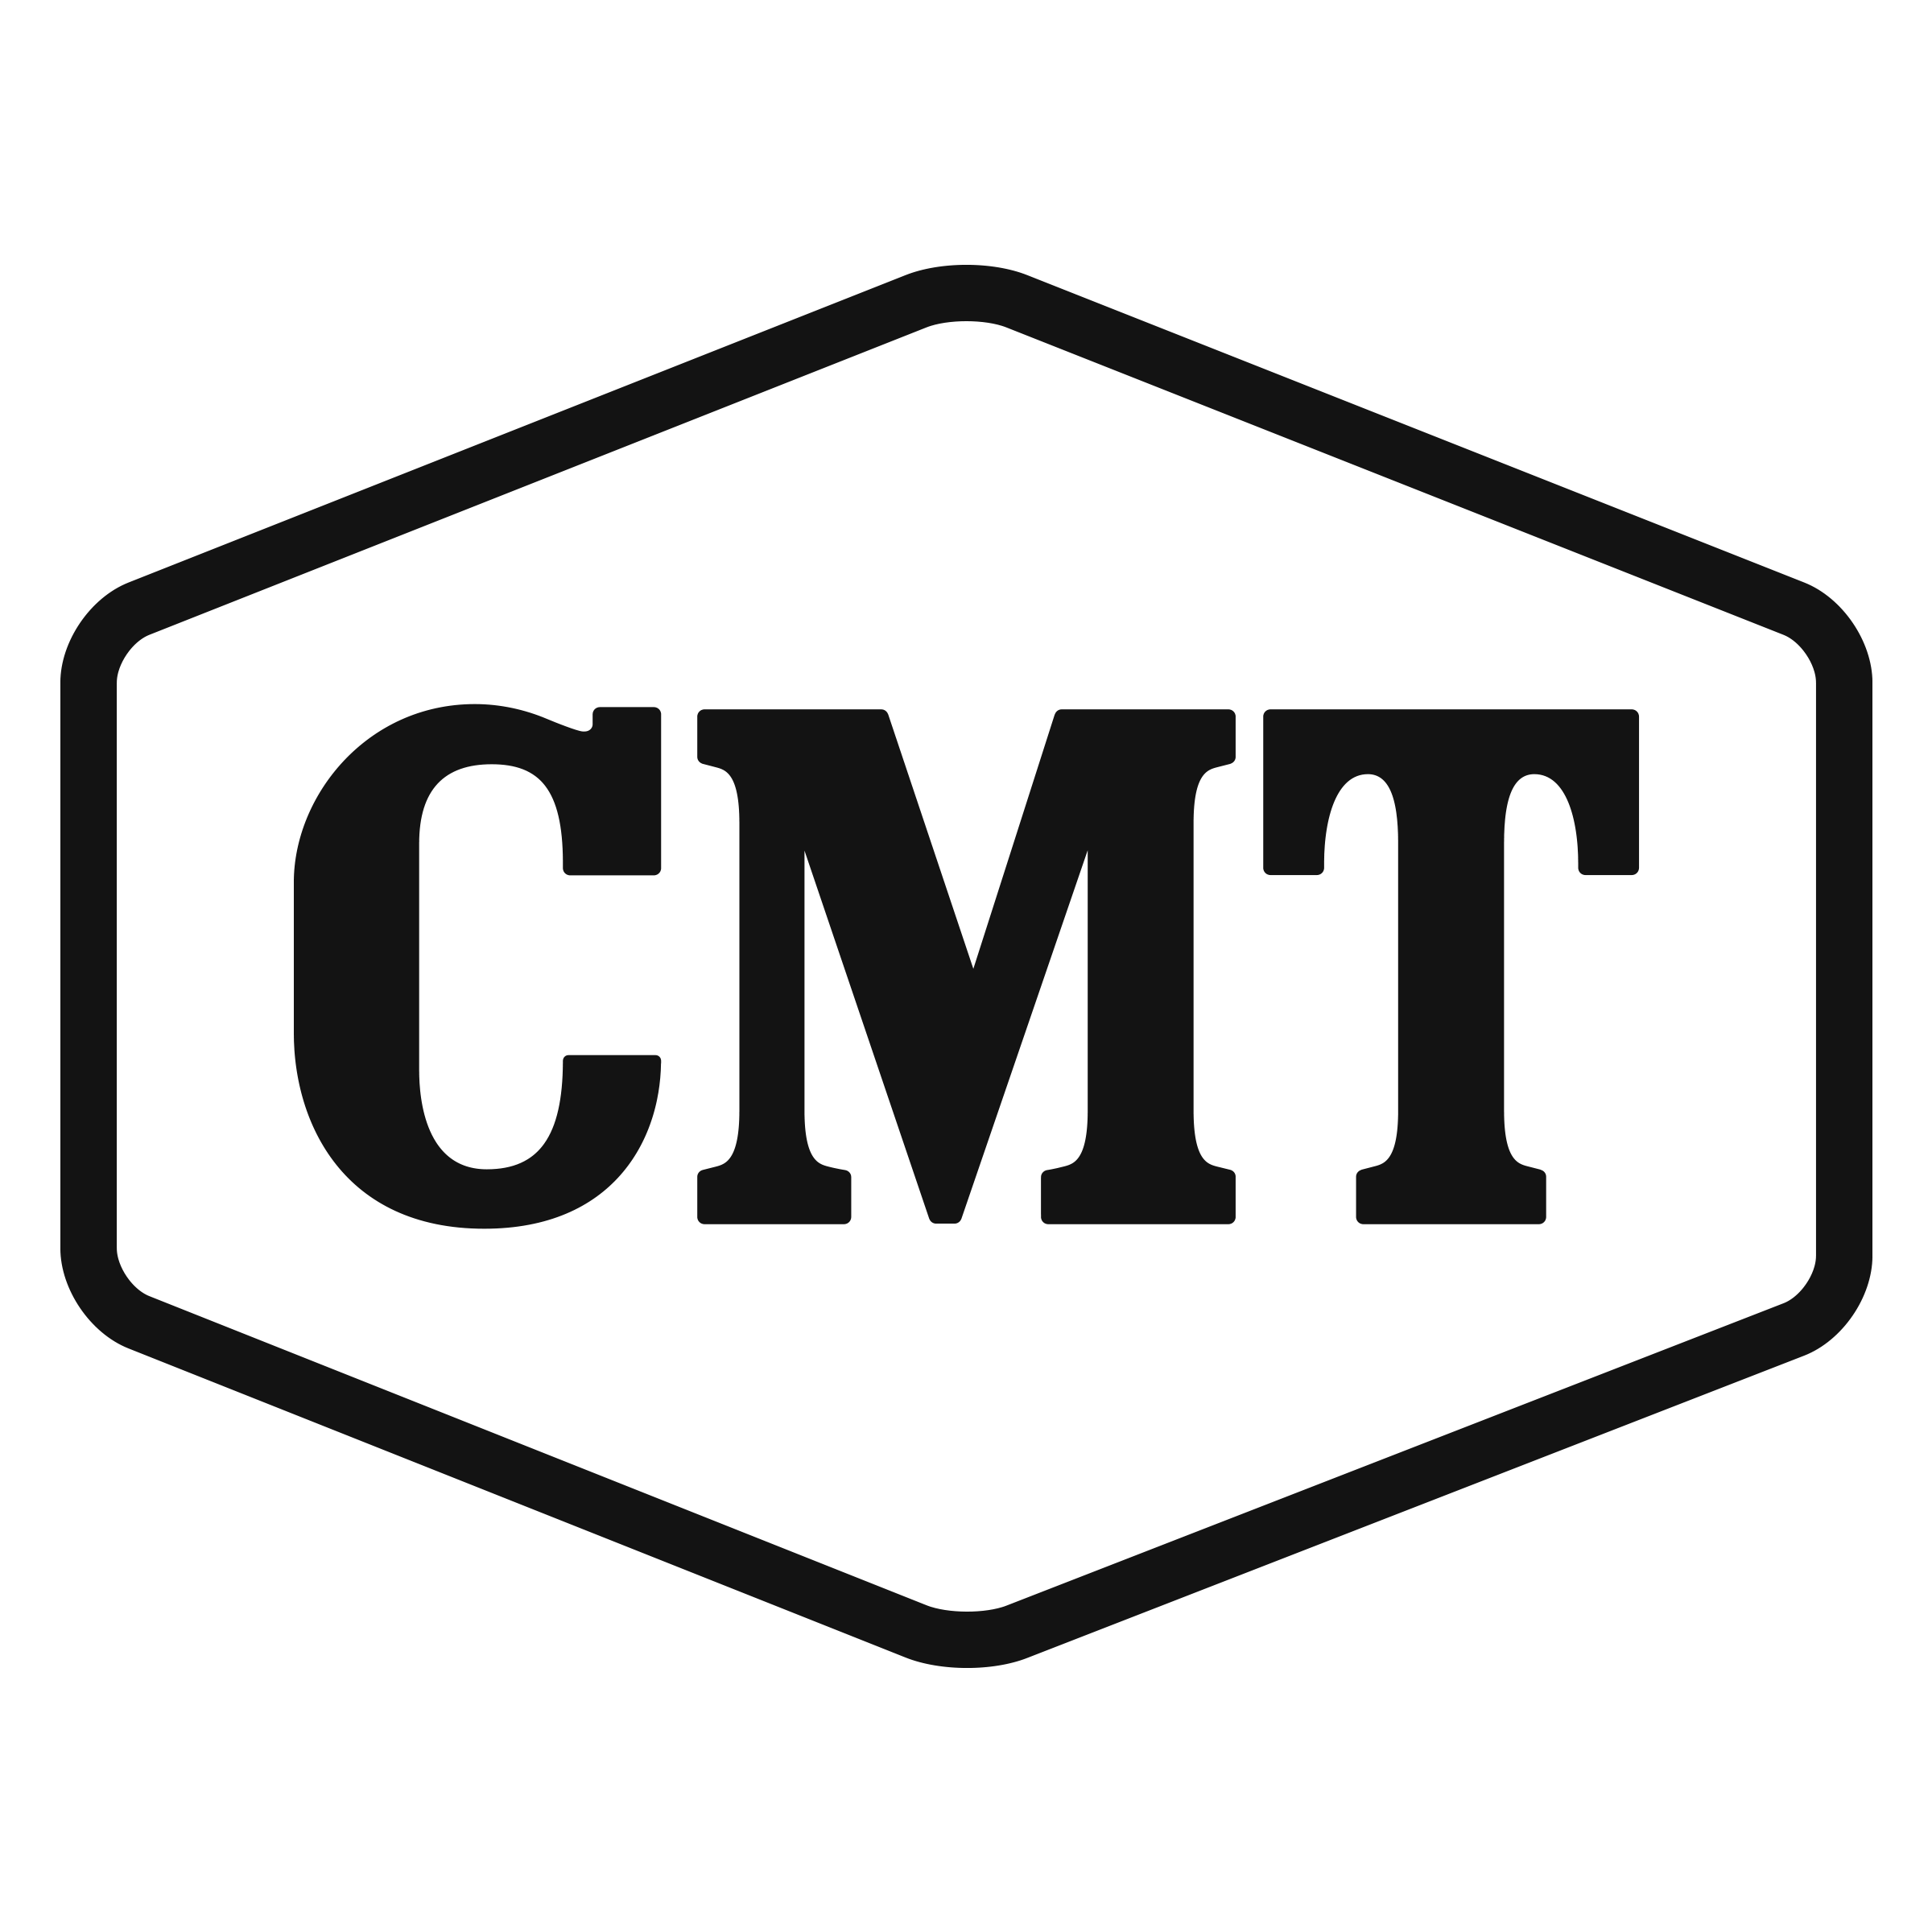 CMT Logo